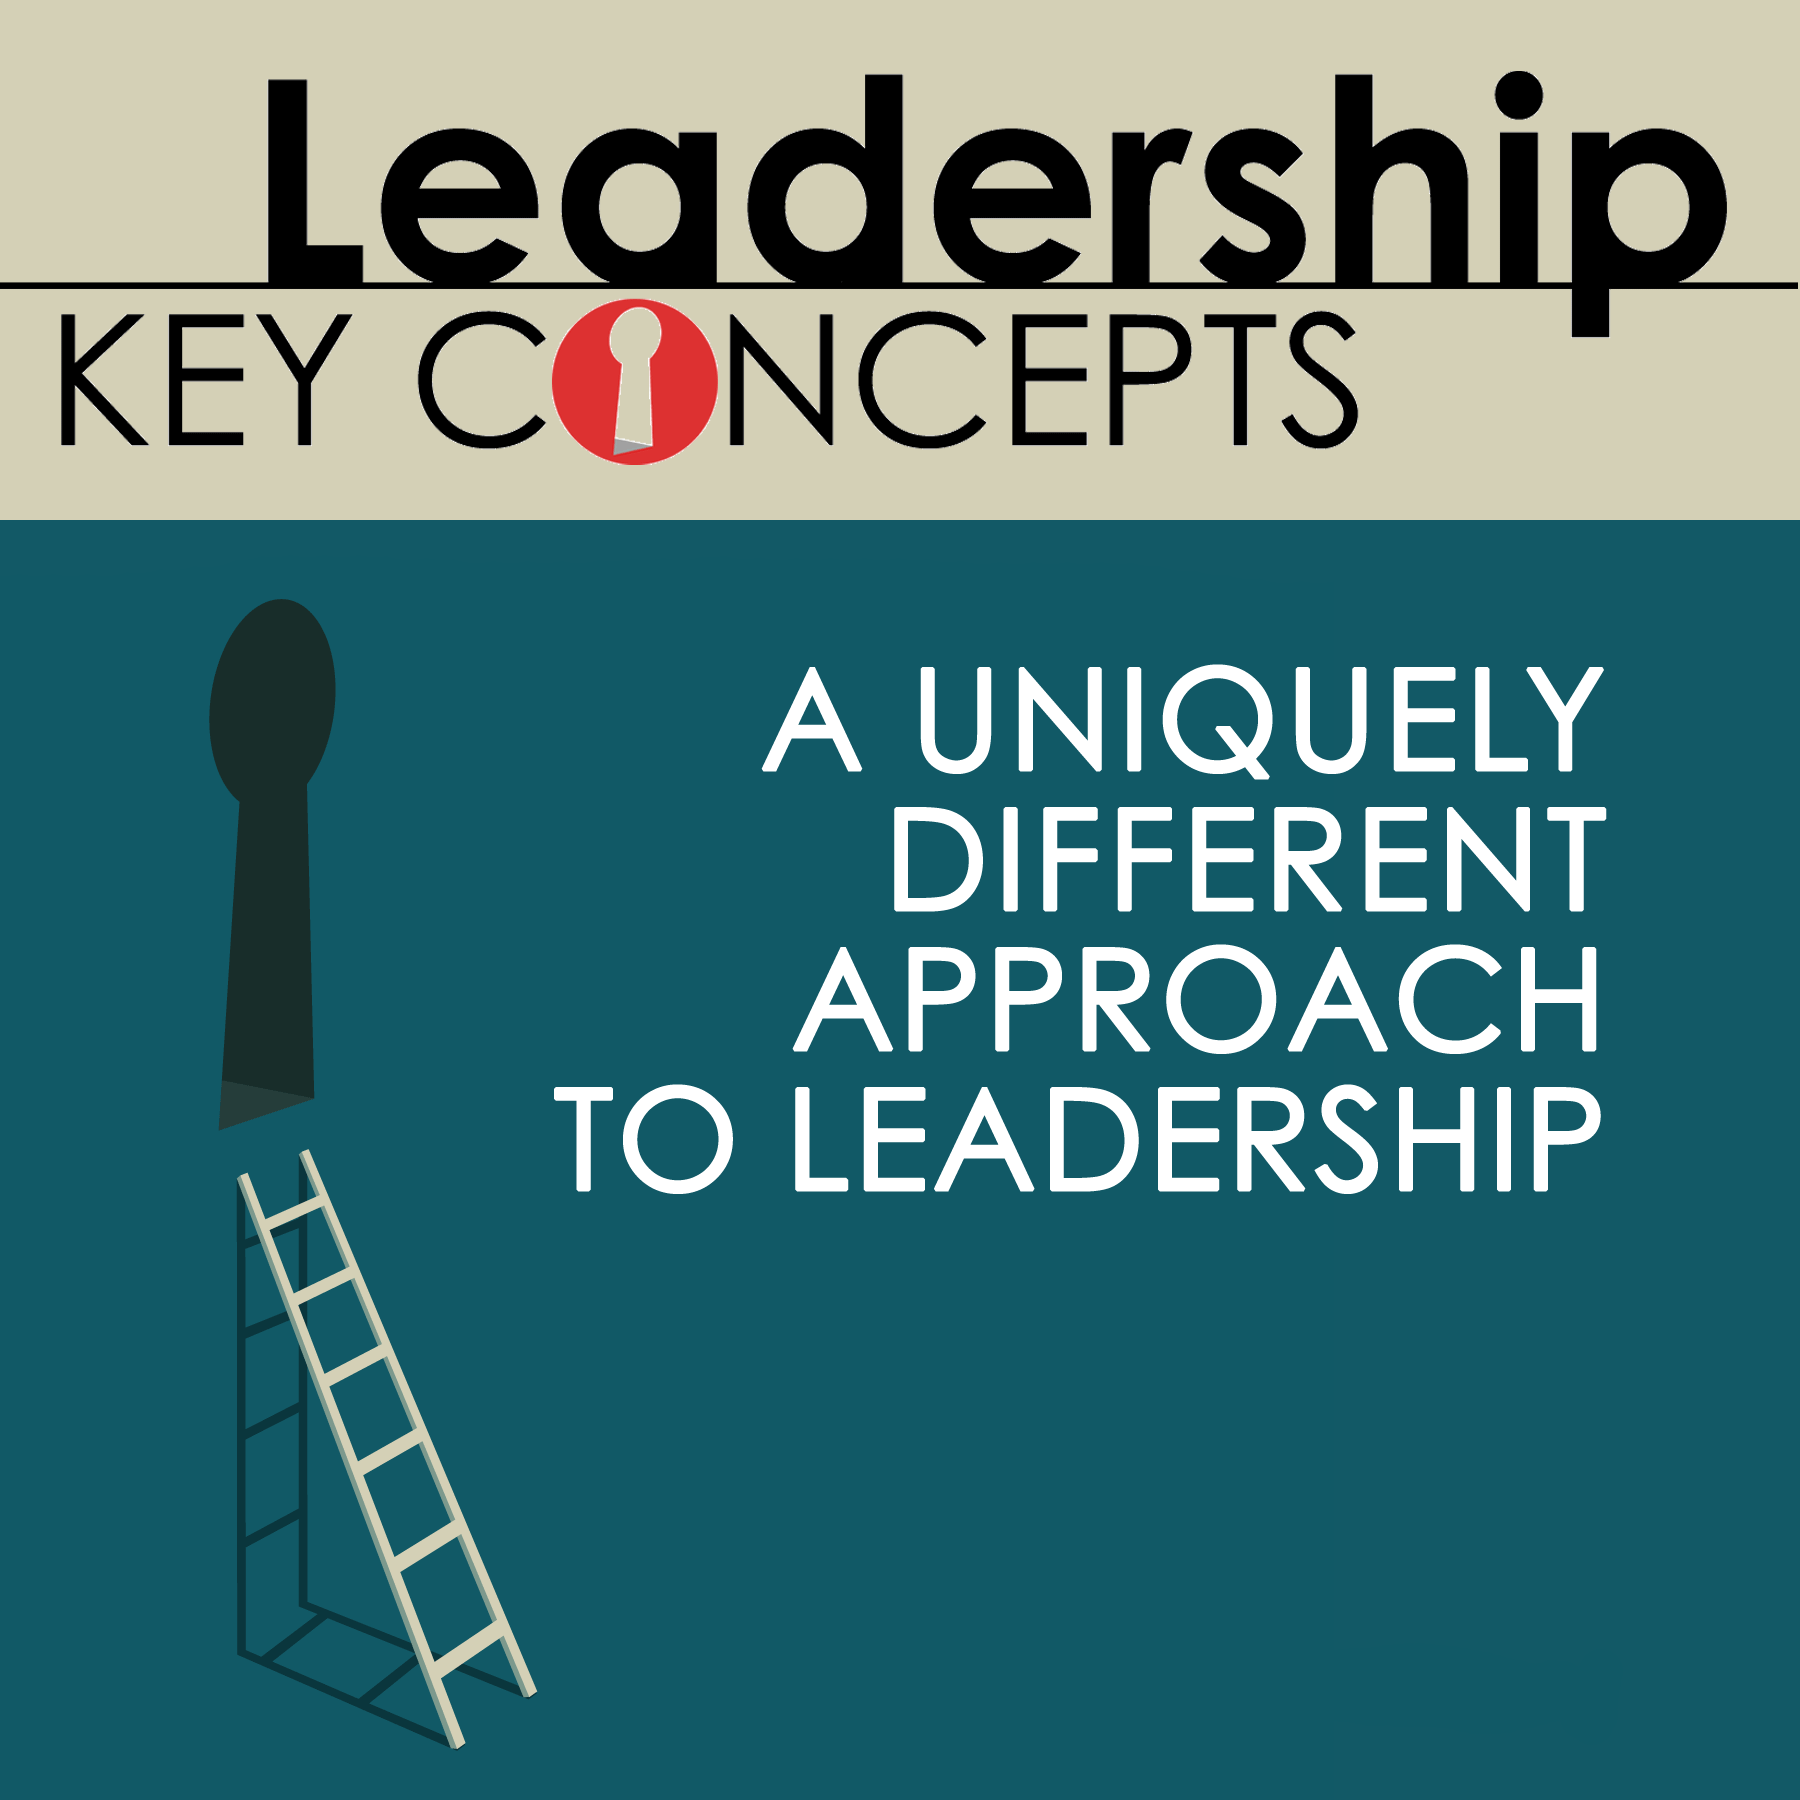 Leadership Key Concepts Book Advertisement Banner